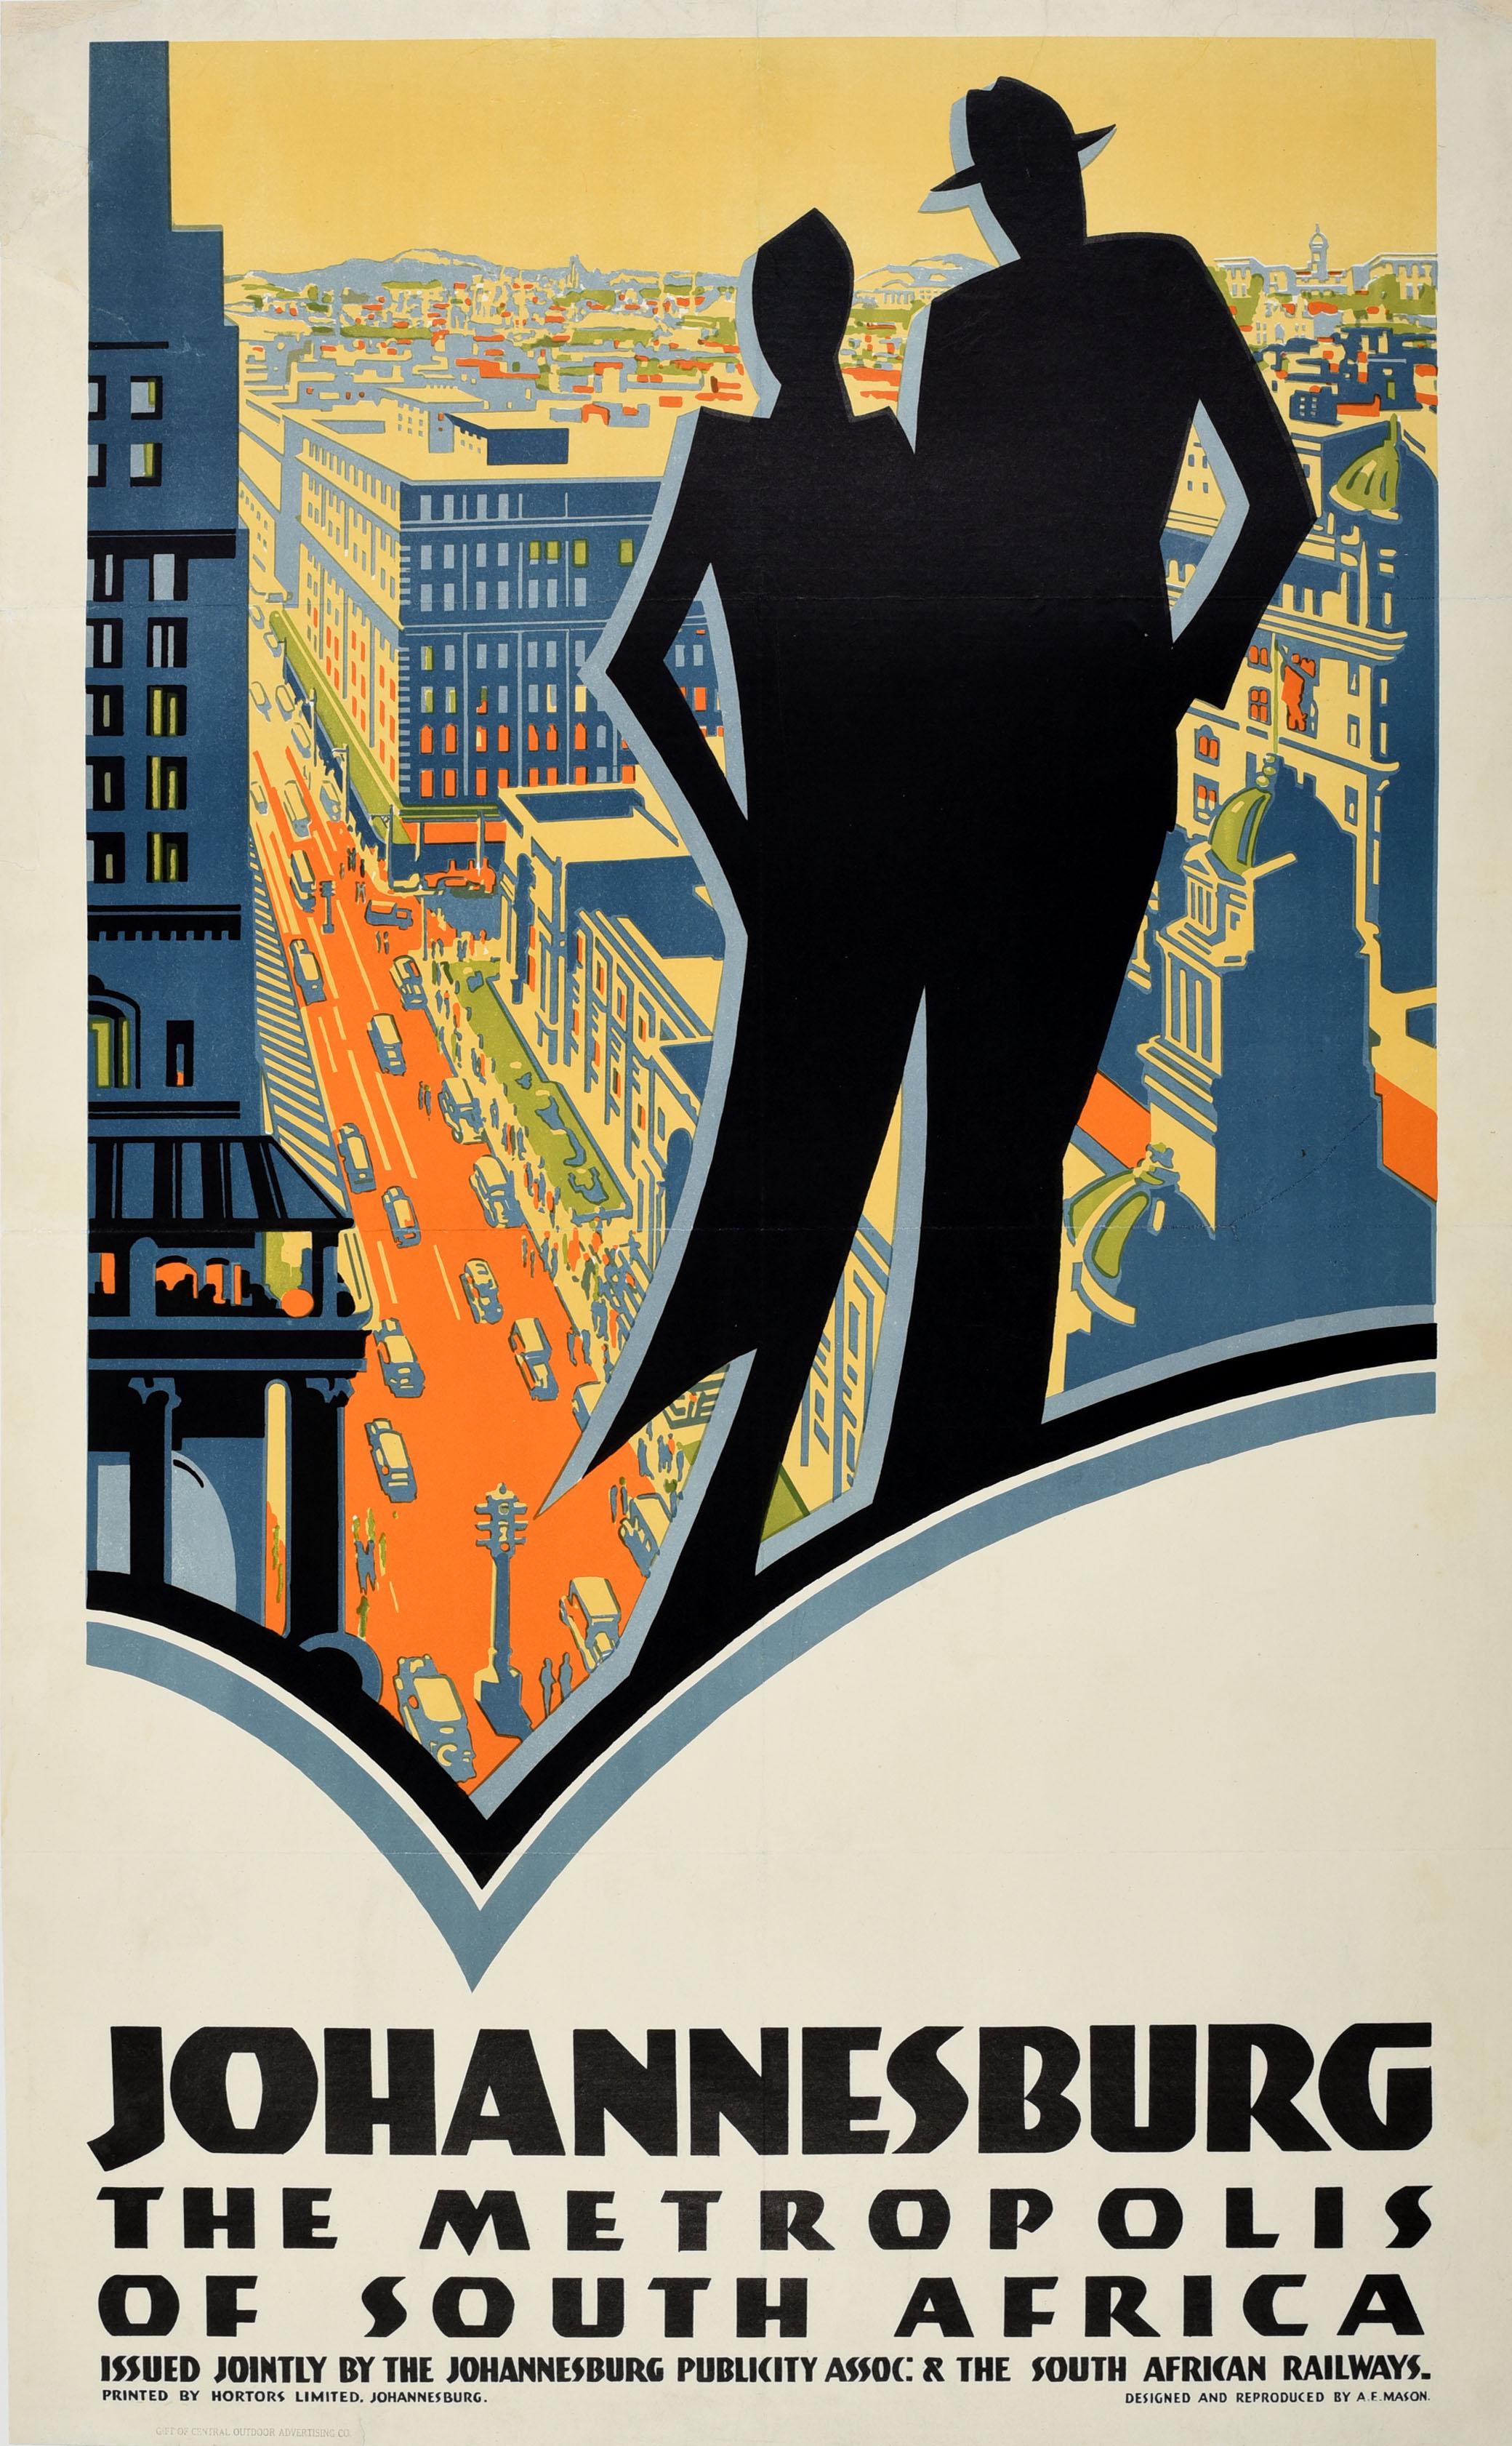 A.E. Mason Print - Original Vintage Rail Travel Poster Johannesburg The Metropolis Of South Africa